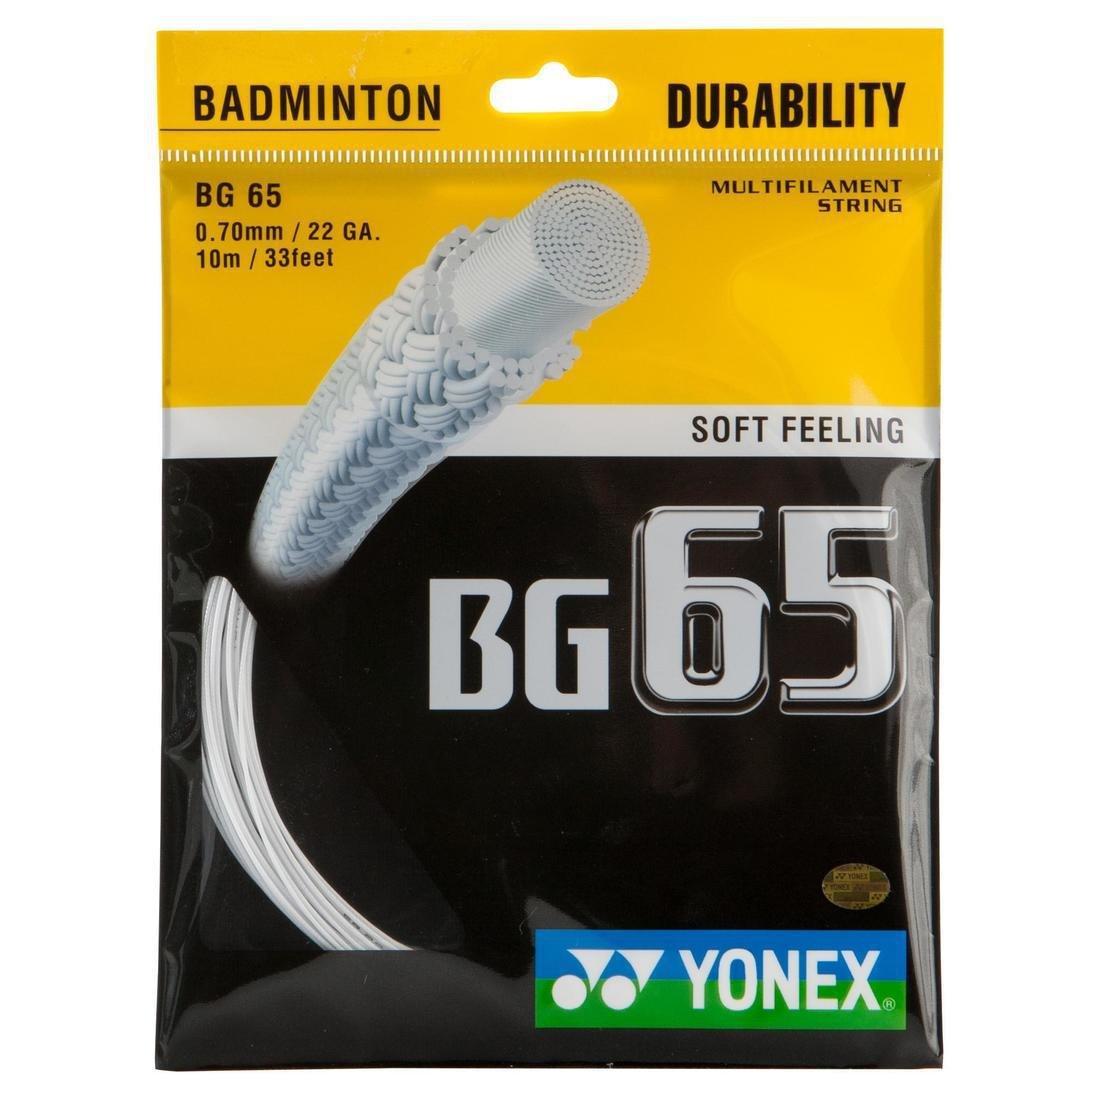 YONEX - BG 65 Badminton String, White